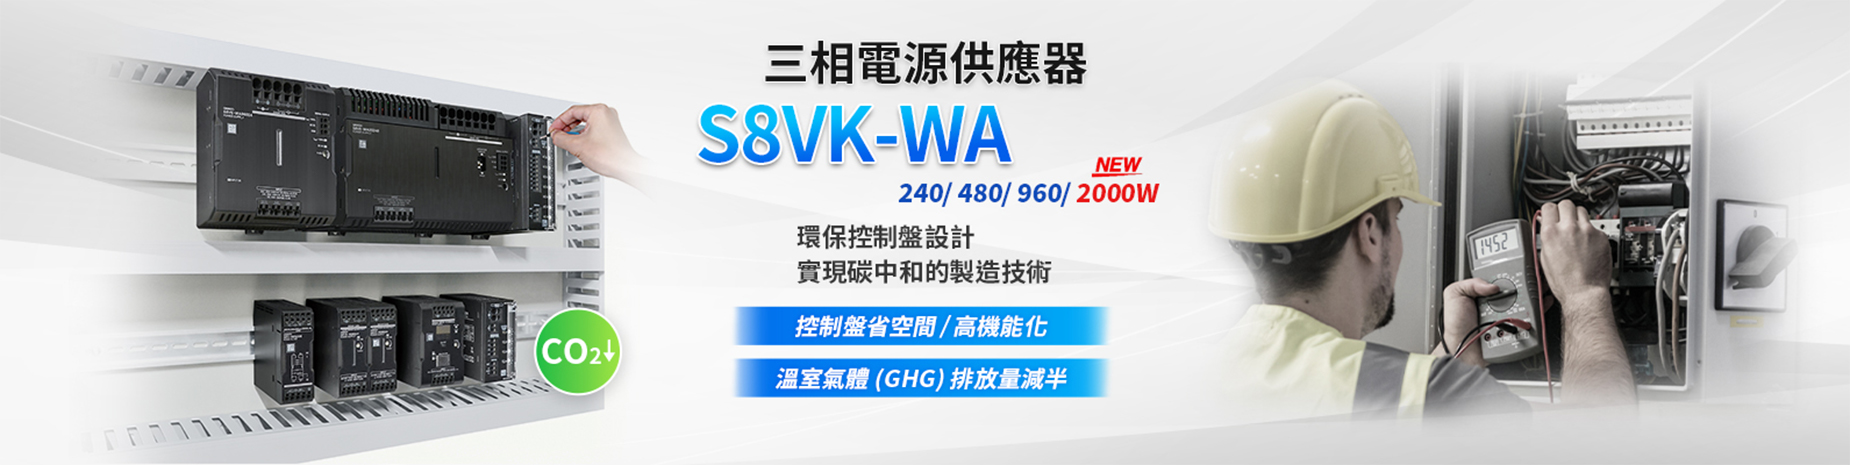 S8VK-WA_NEW